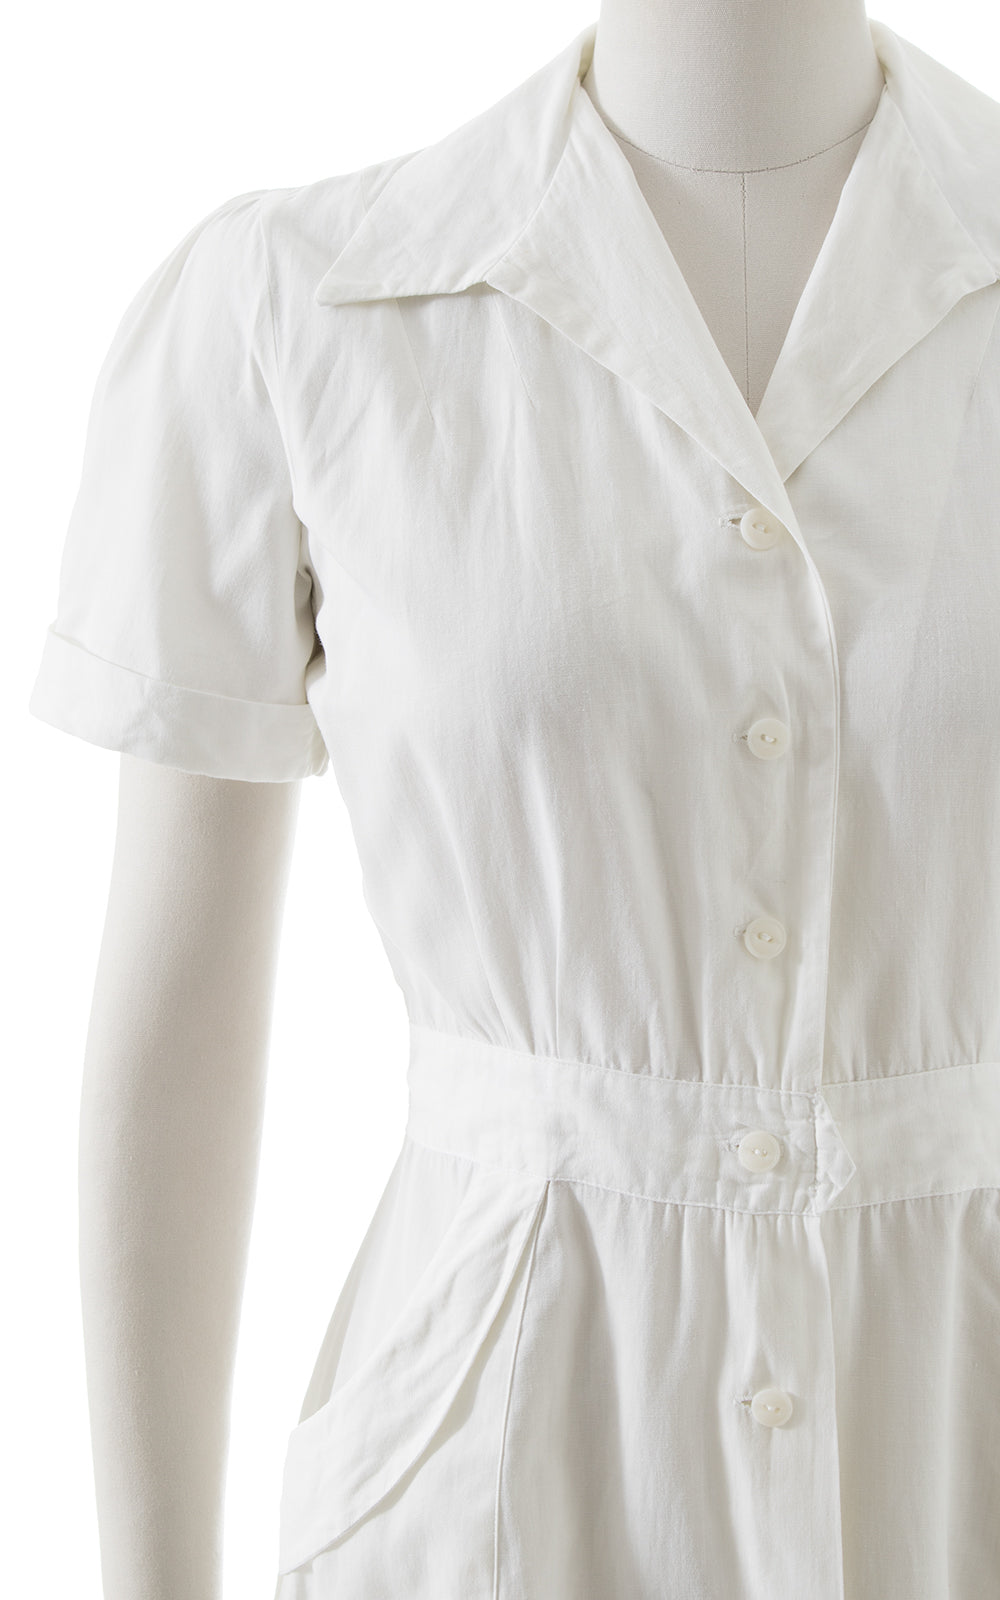 1940s White Cotton Shirtwaist Dress